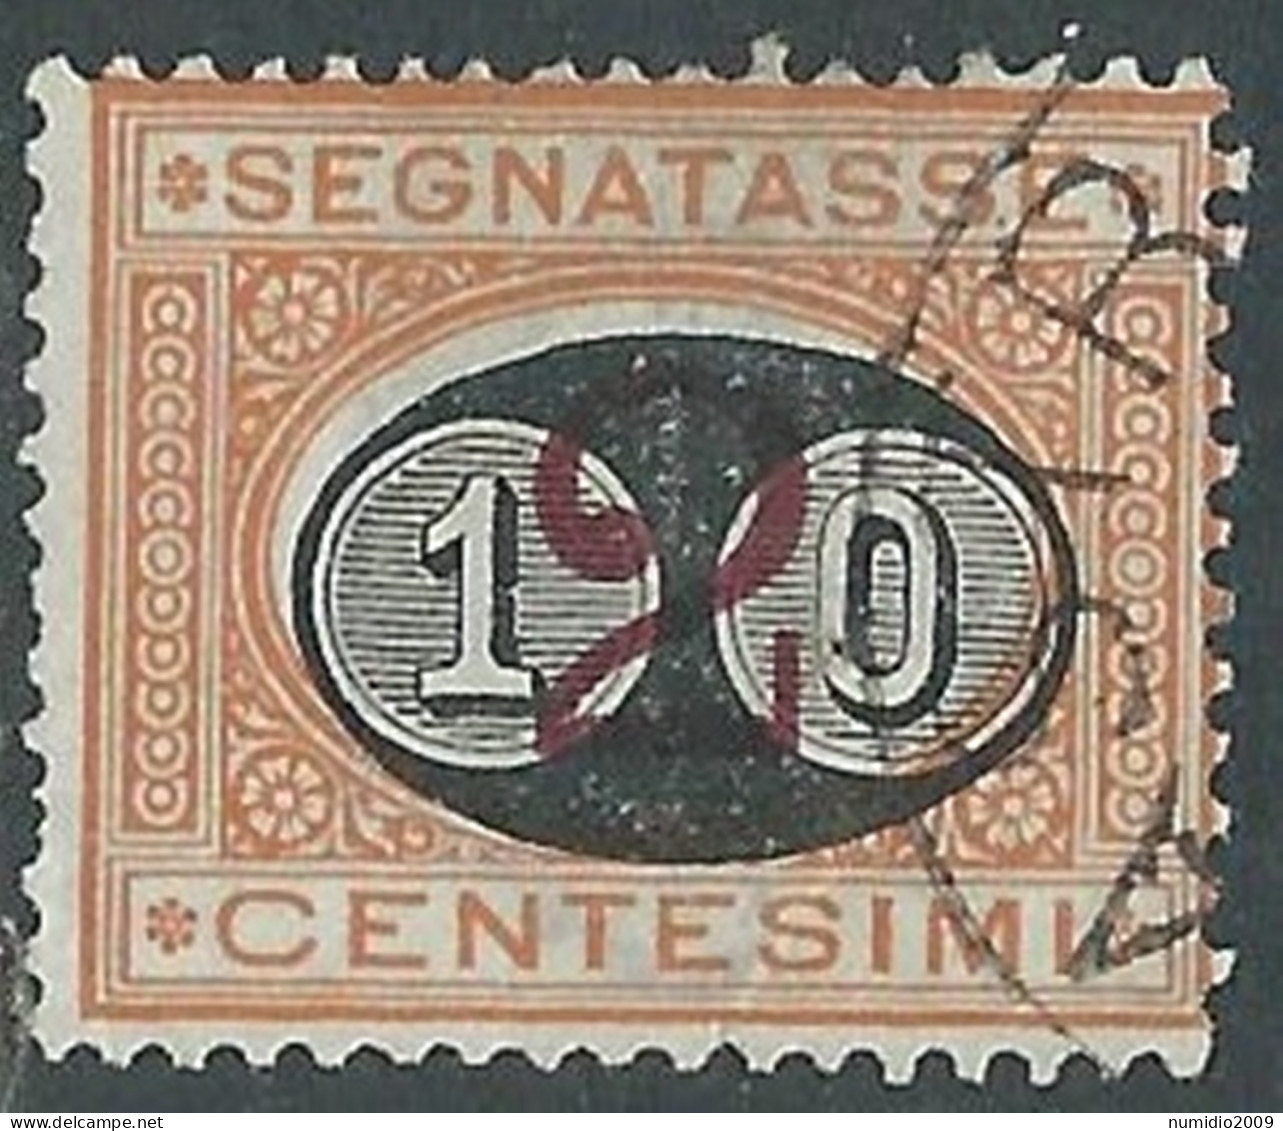 1890-91 REGNO SEGNATASSE USATO SOPRASTAMPATO 10 SU 2 CENT - P13 - Segnatasse